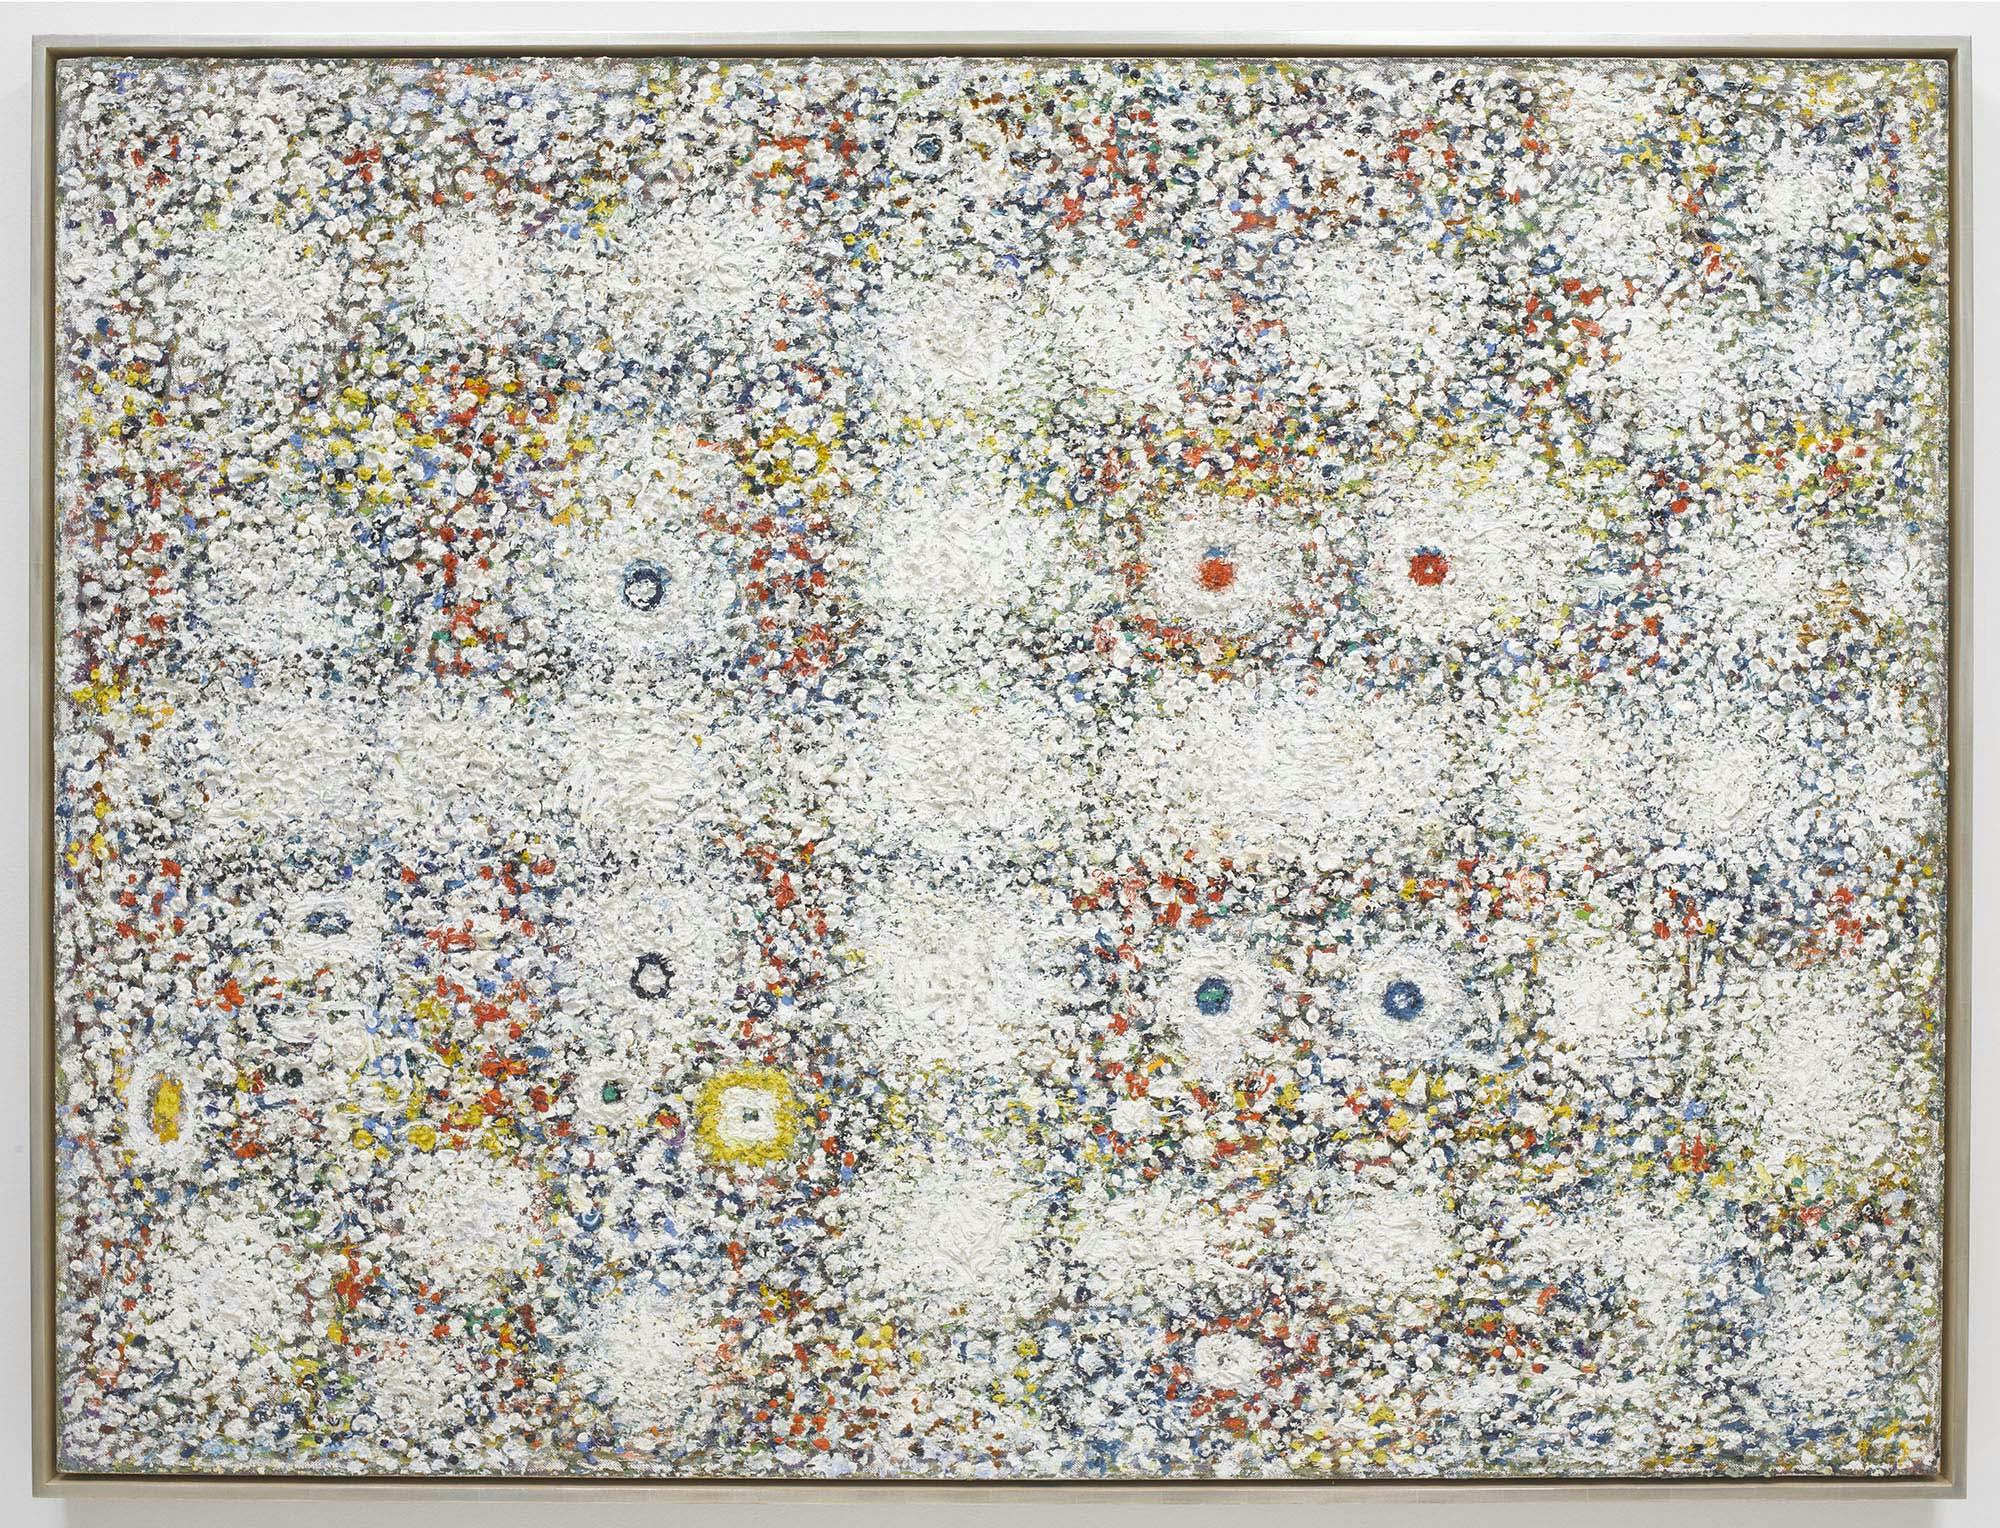 Soft Edges of Time
1976–82
Oil on linen
54 x 72 in. (137.2 x 182.9 cm)
 – The Richard Pousette-Dart Foundation